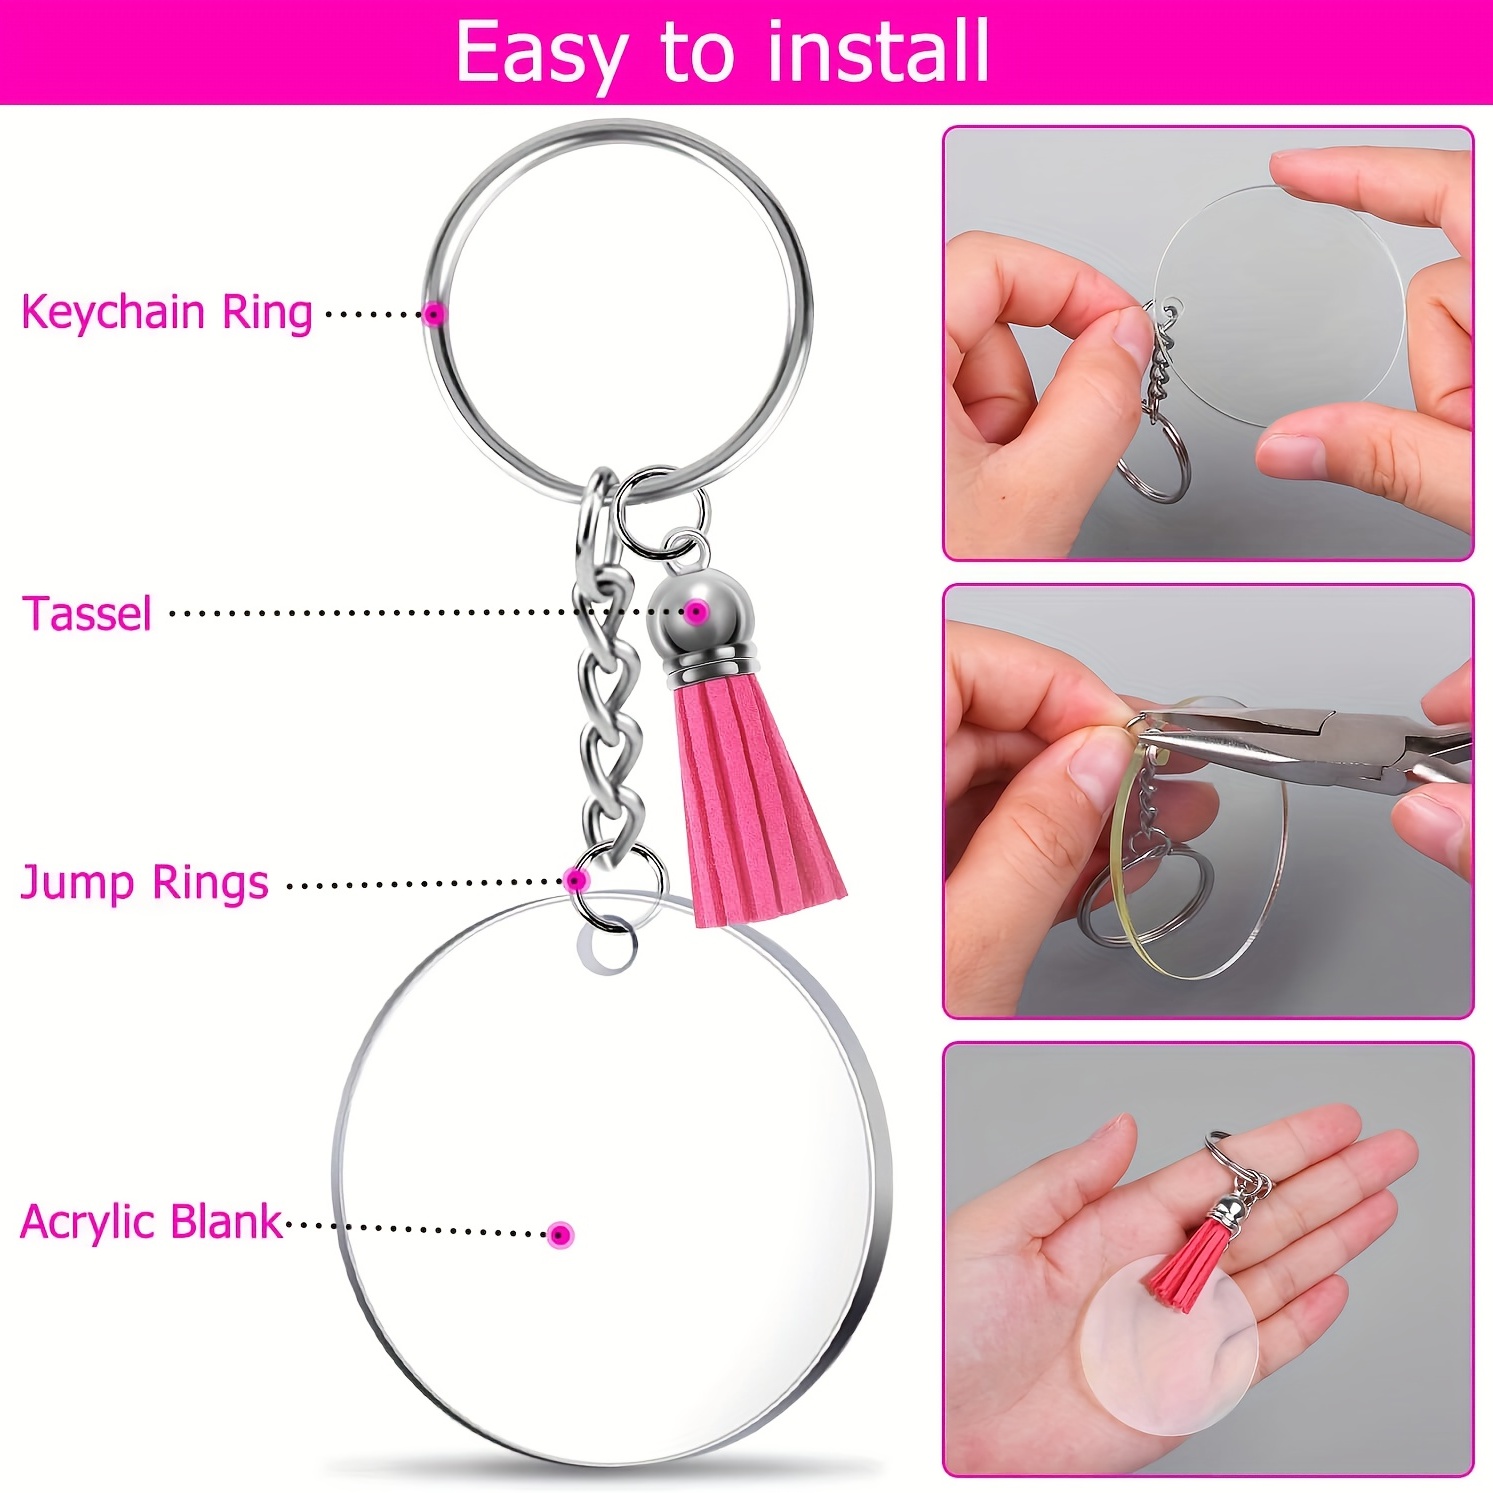 Blank Round Acrylic Keychains, Acrylic Keychain Blanks Kit